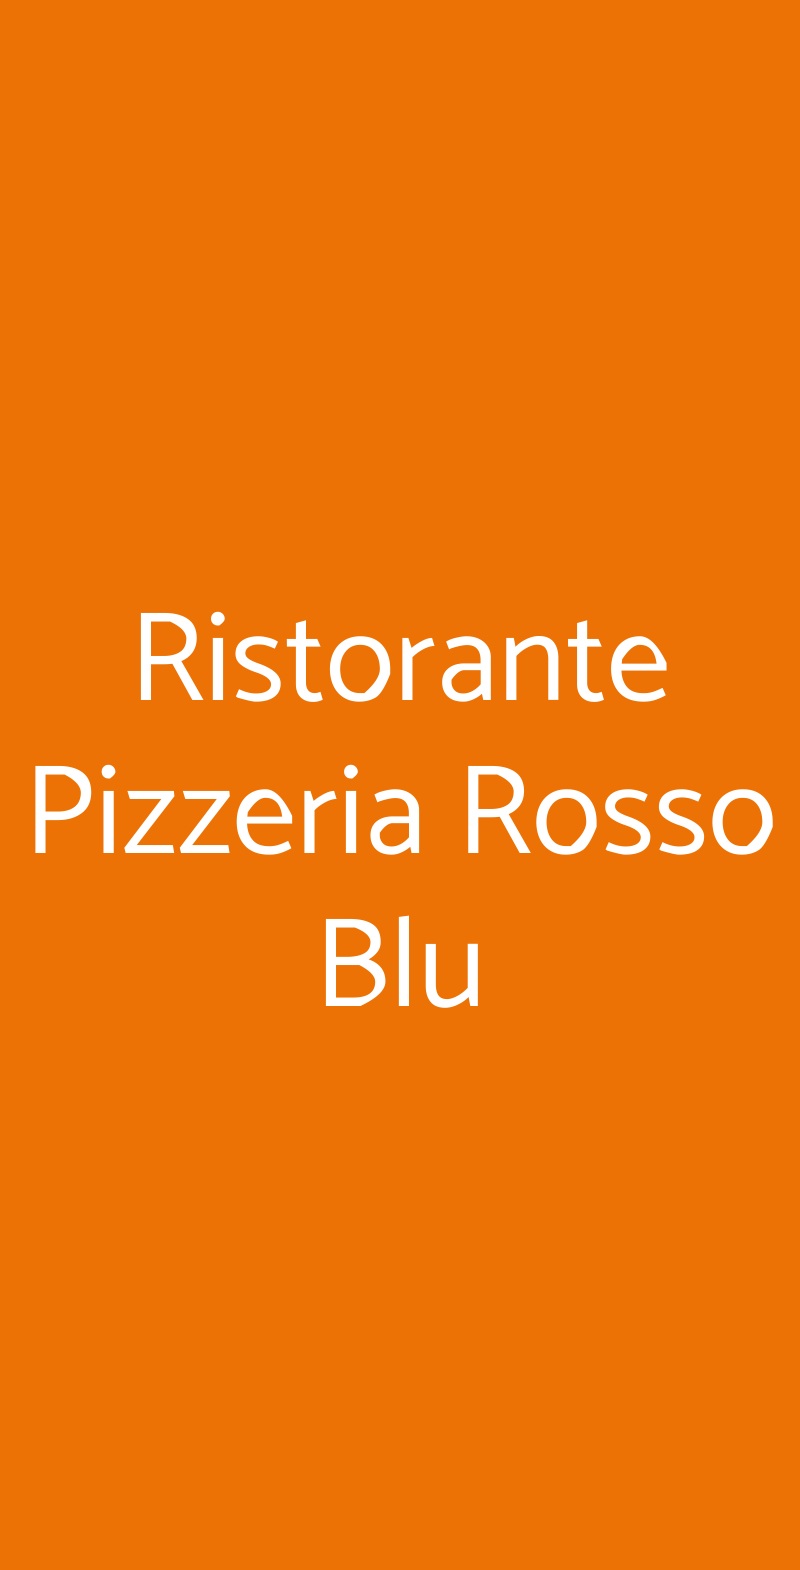 Ristorante Pizzeria Rosso Blu Firenze menù 1 pagina